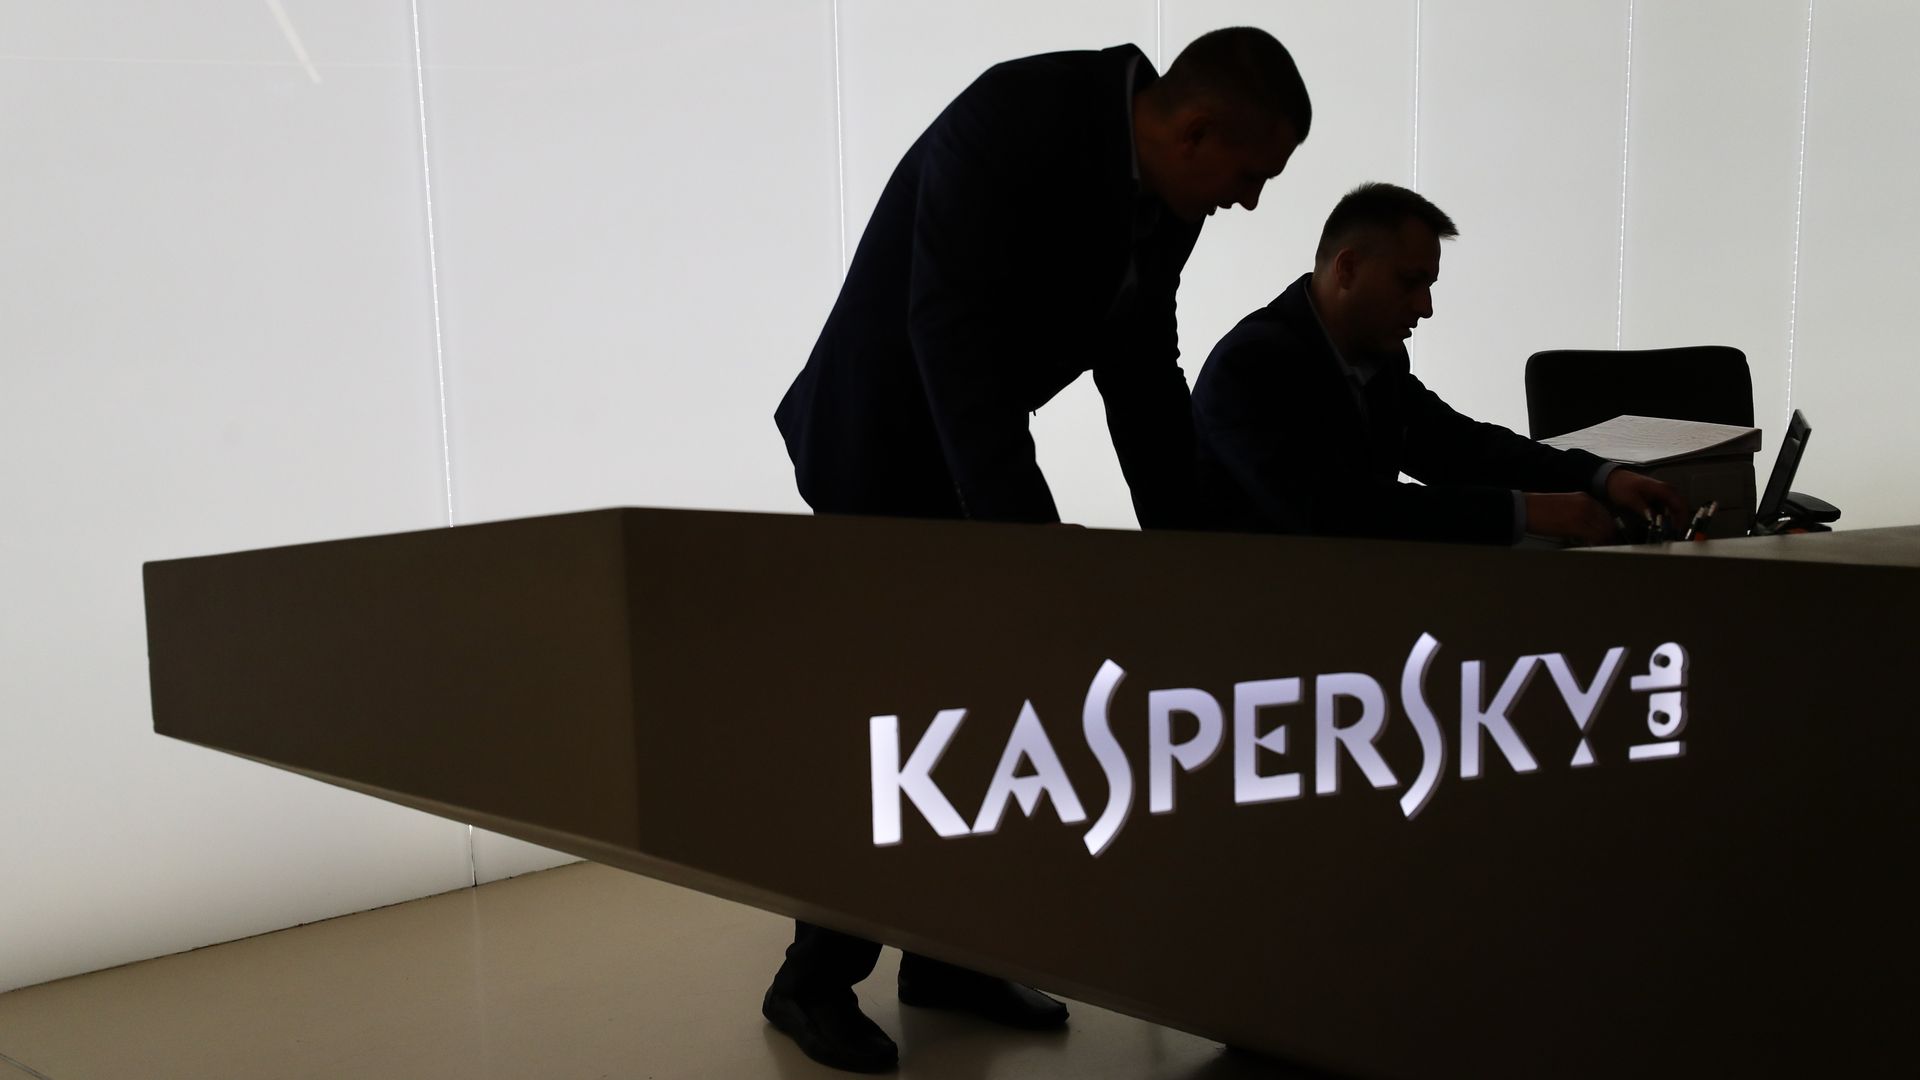 Kaspersky Lab's headquarters